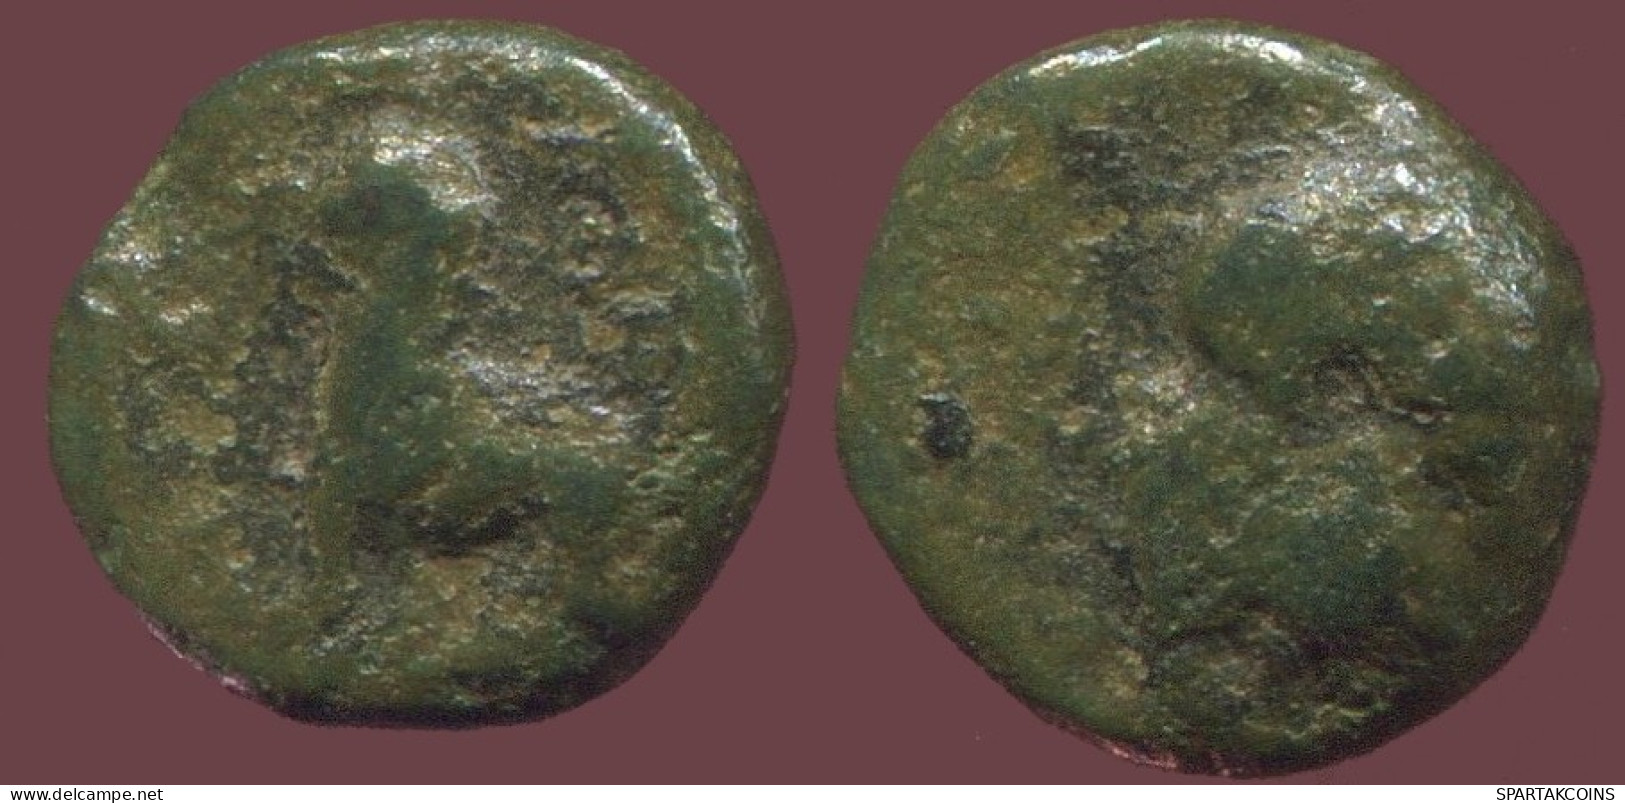 DEER Antike Authentische Original GRIECHISCHE Münze 0.6g/8mm #ANT1585.9.D.A - Griechische Münzen